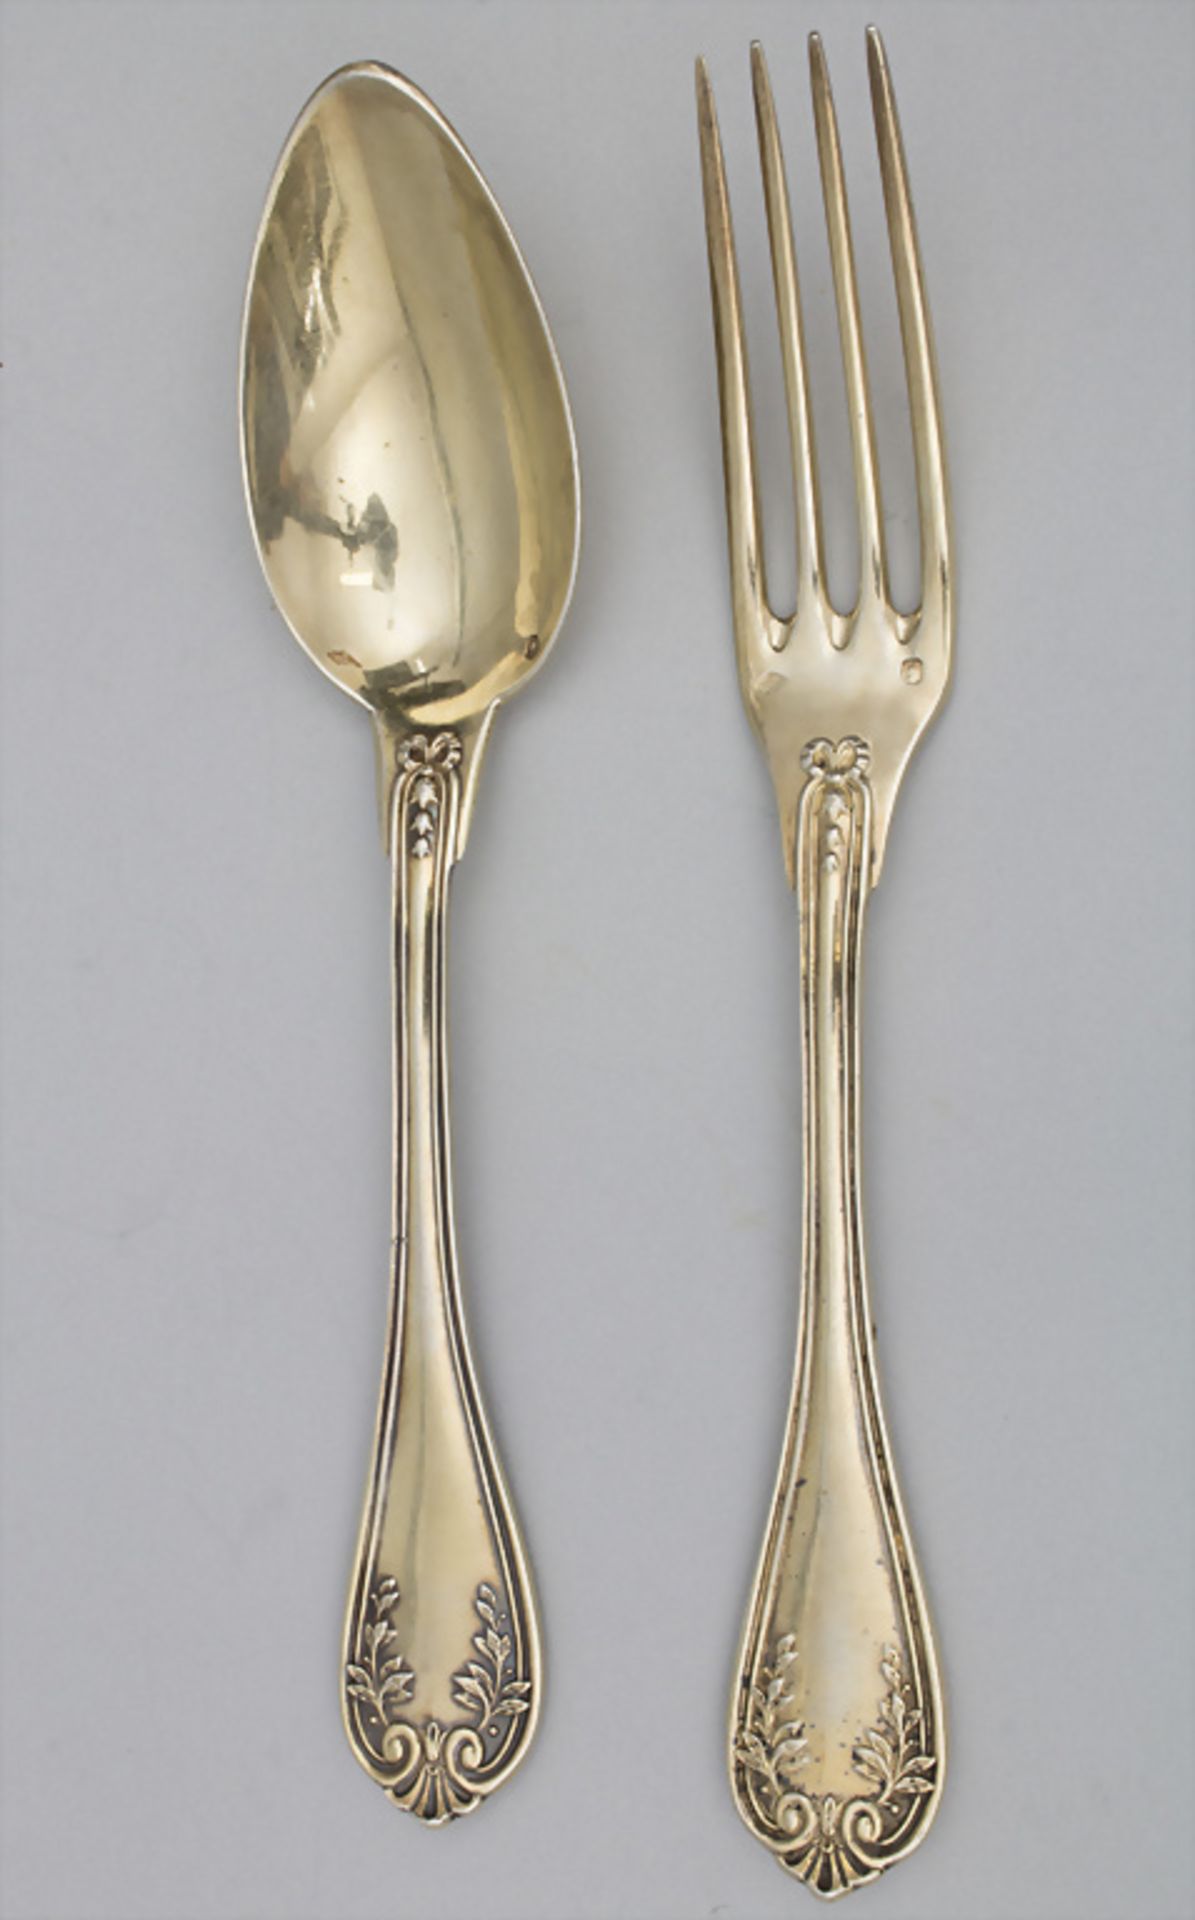 12-teiliges Silberbesteck / A 12-part silver cutlery, Veyrat, Paris, um 1900 - Image 3 of 8